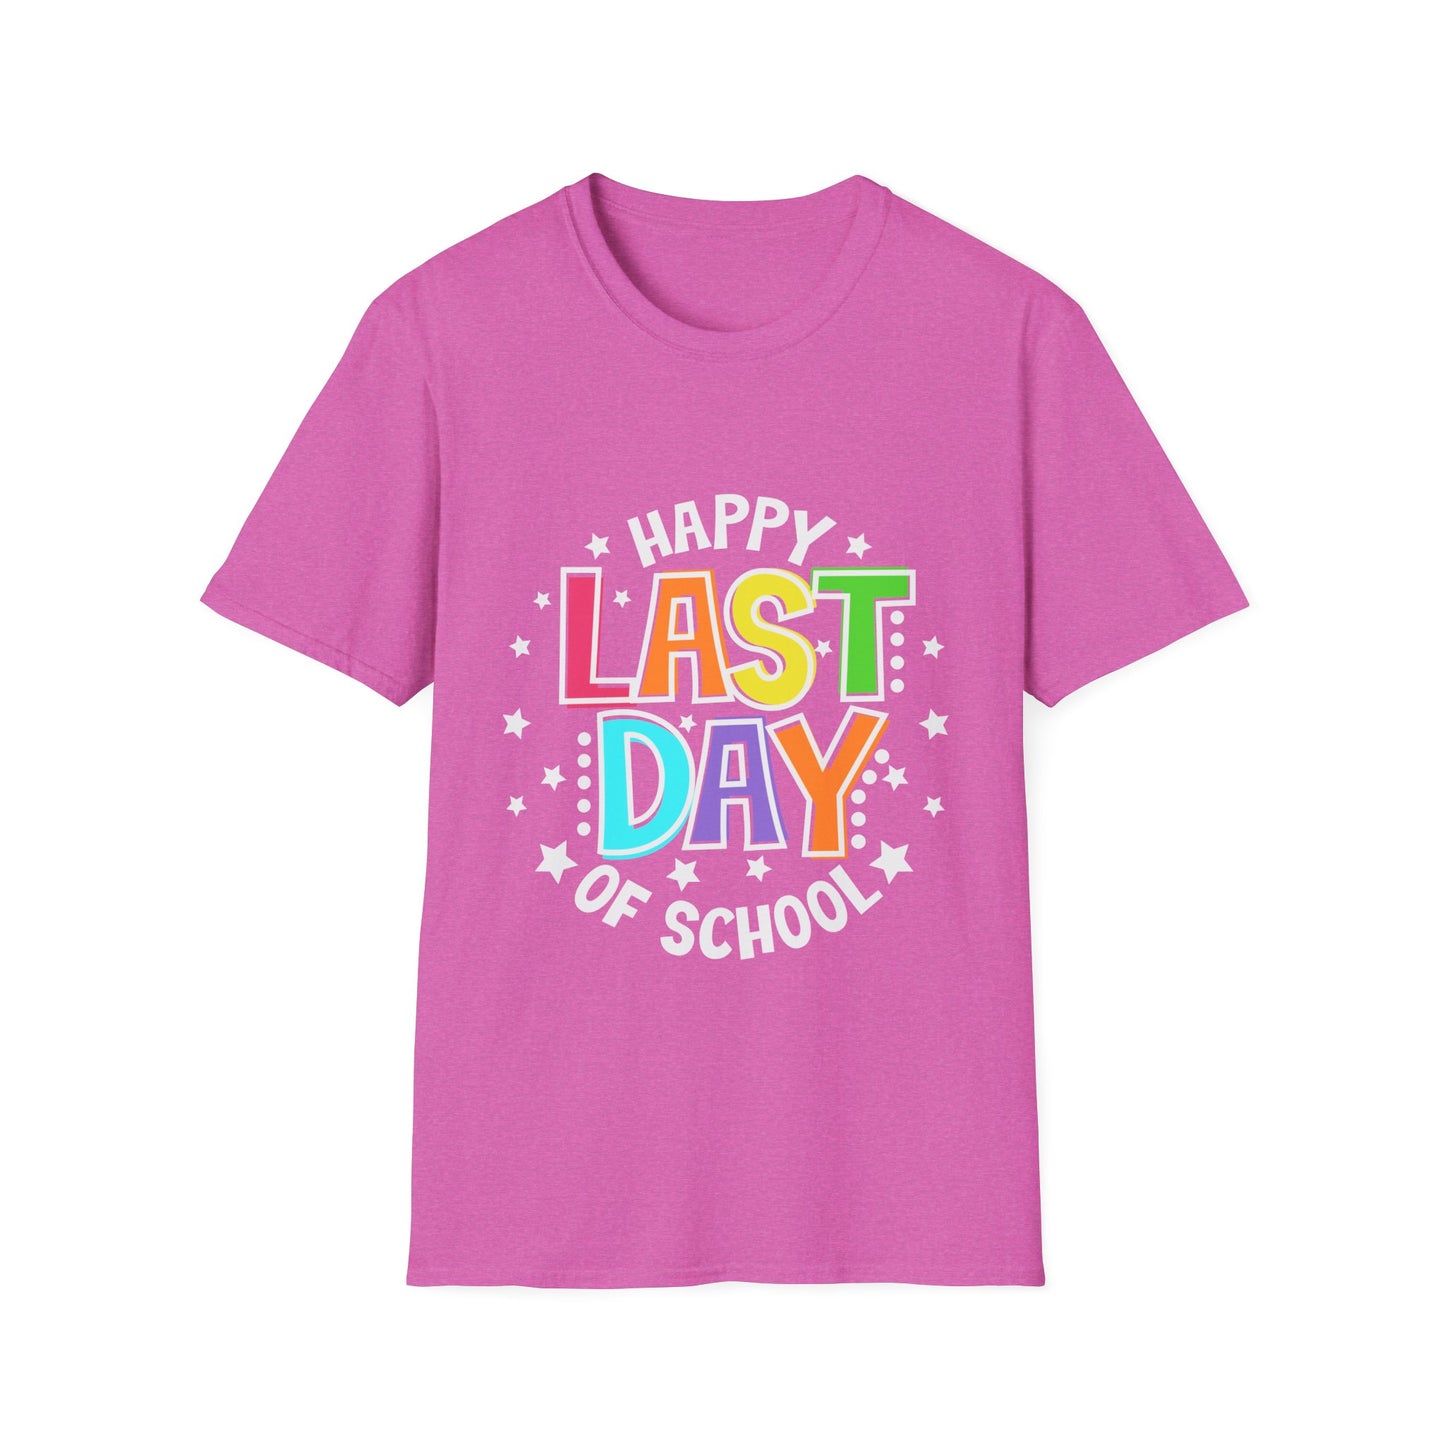 LAST DAY OF SCHOOL shirt